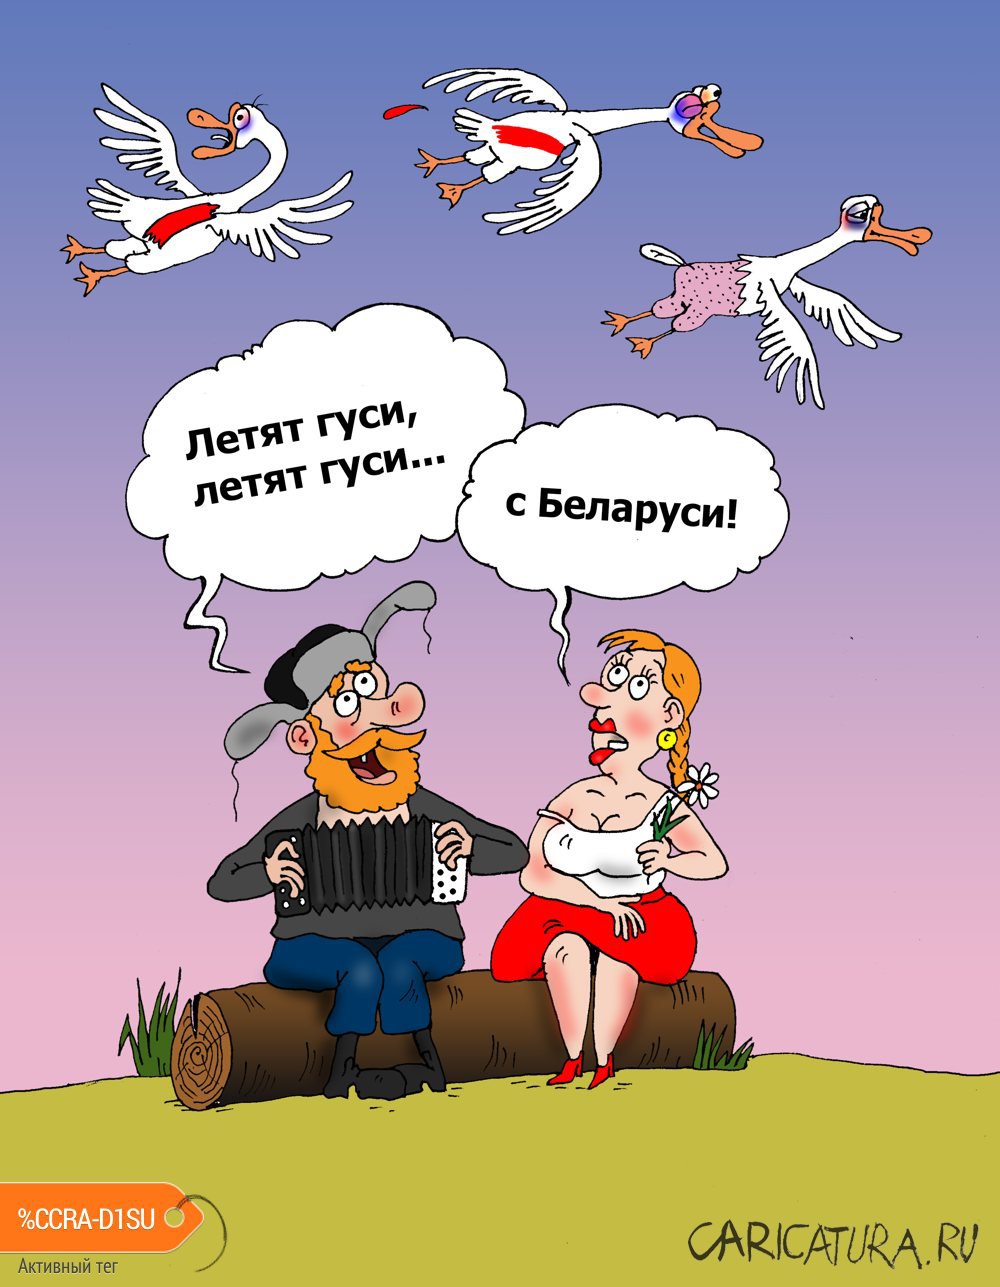 Карикатура "Страдания", Валерий Тарасенко